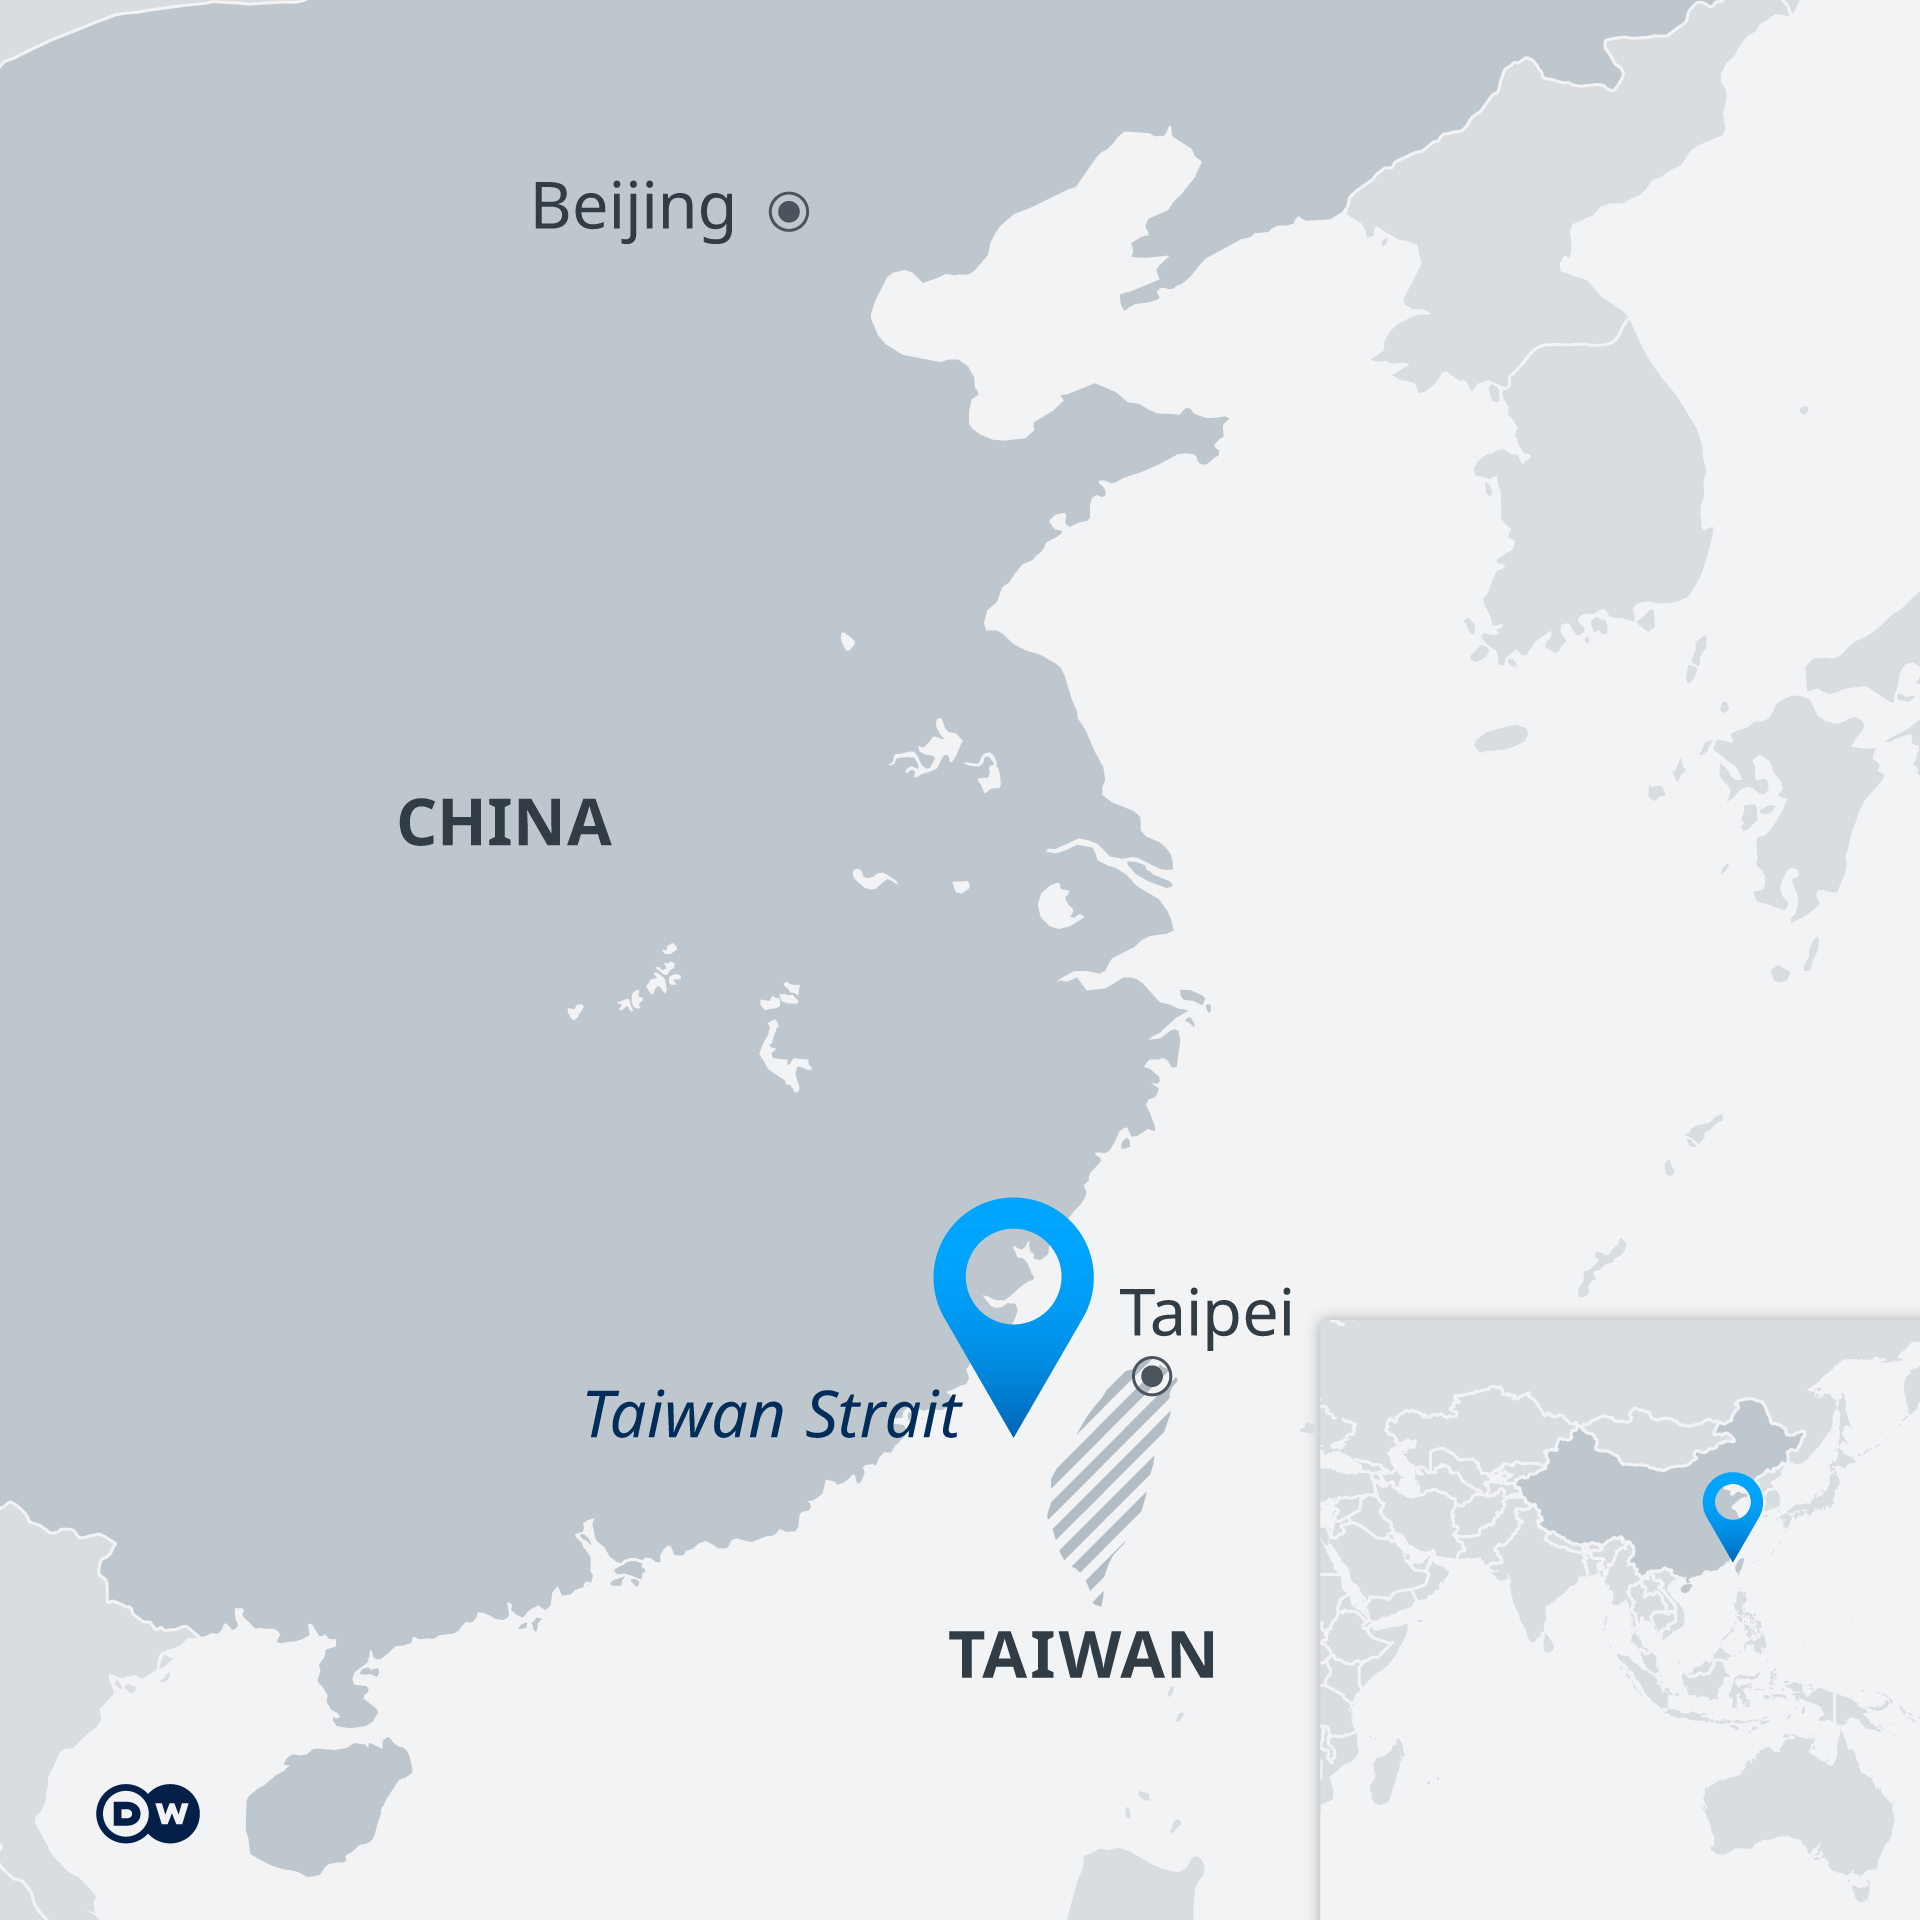 The Taiwan Strait